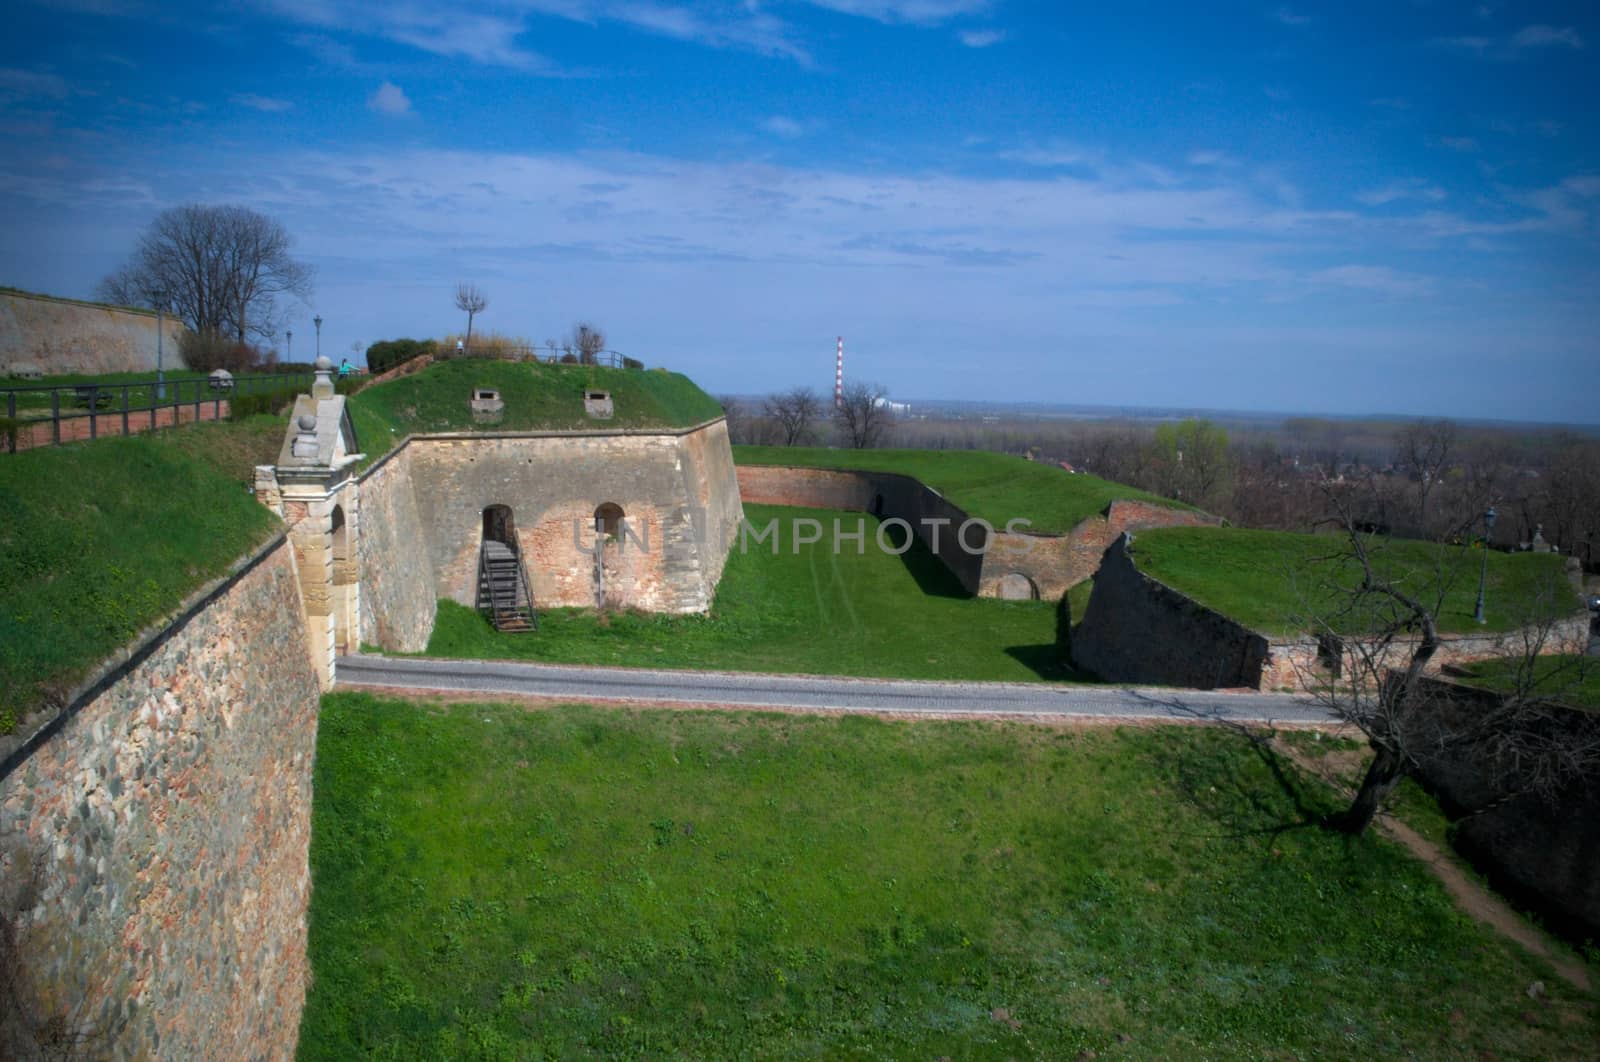 Landscape at Petrovaradin fortress, Serbia